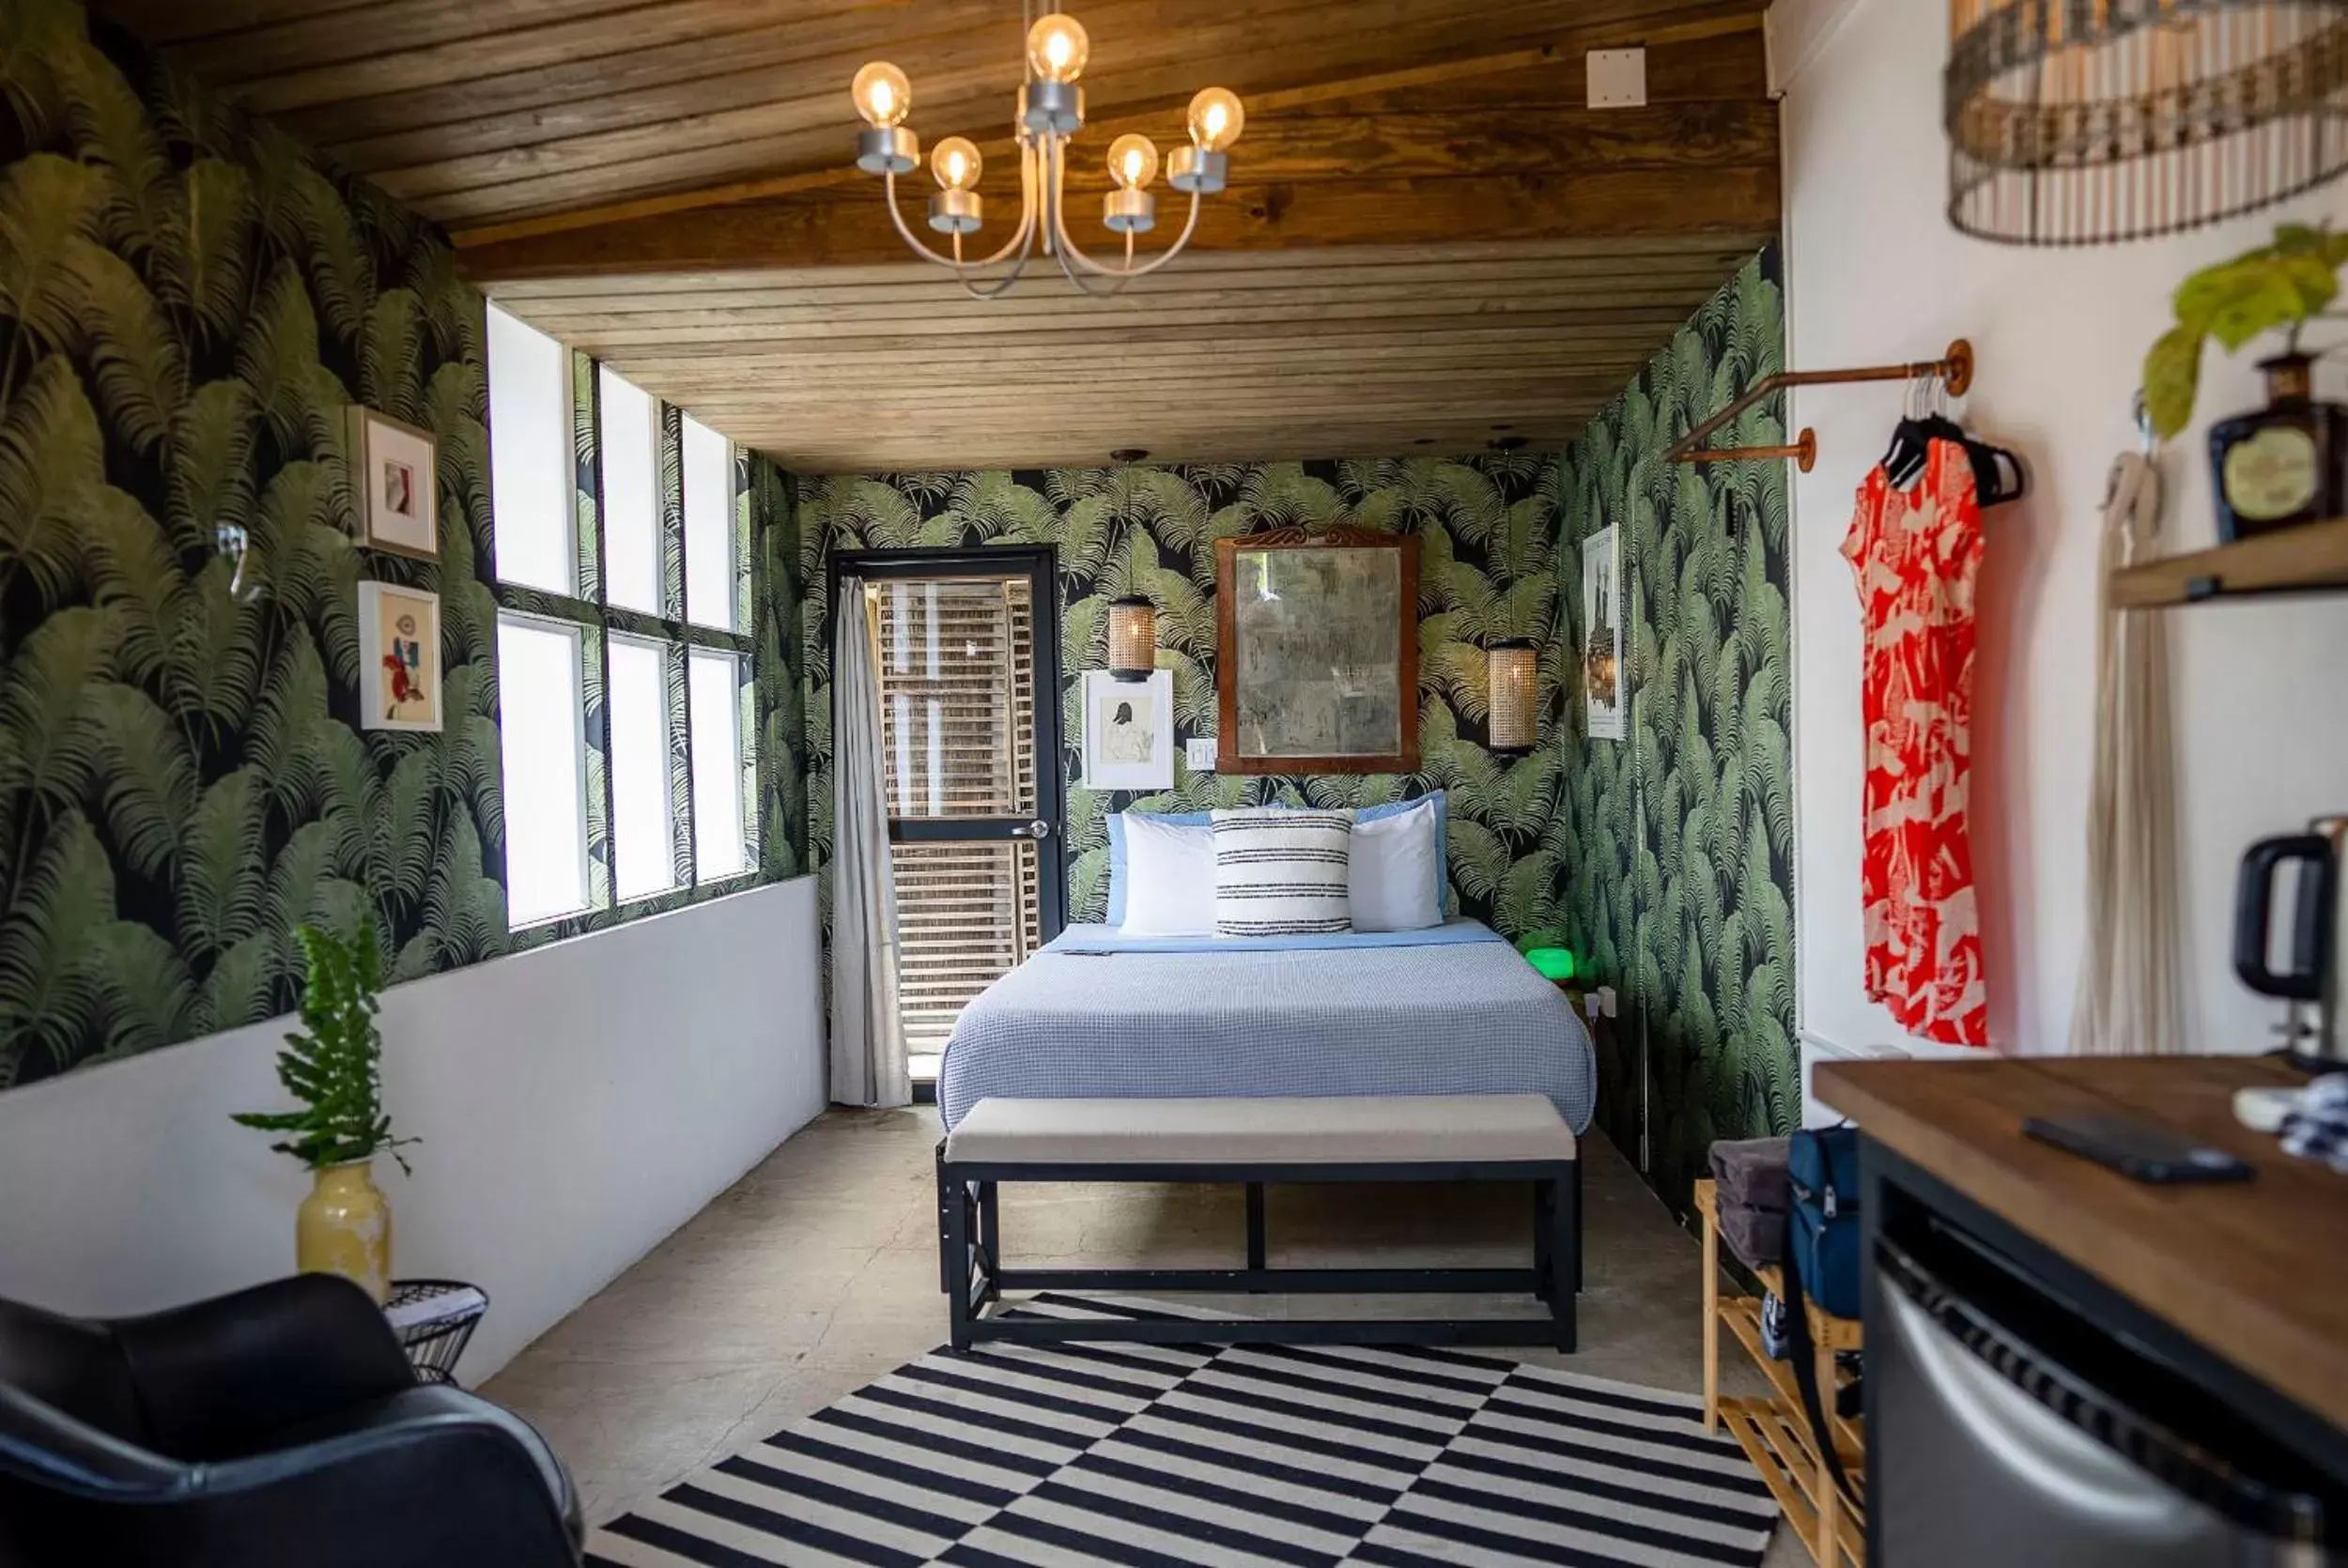 Bed in La Botanica Hotel